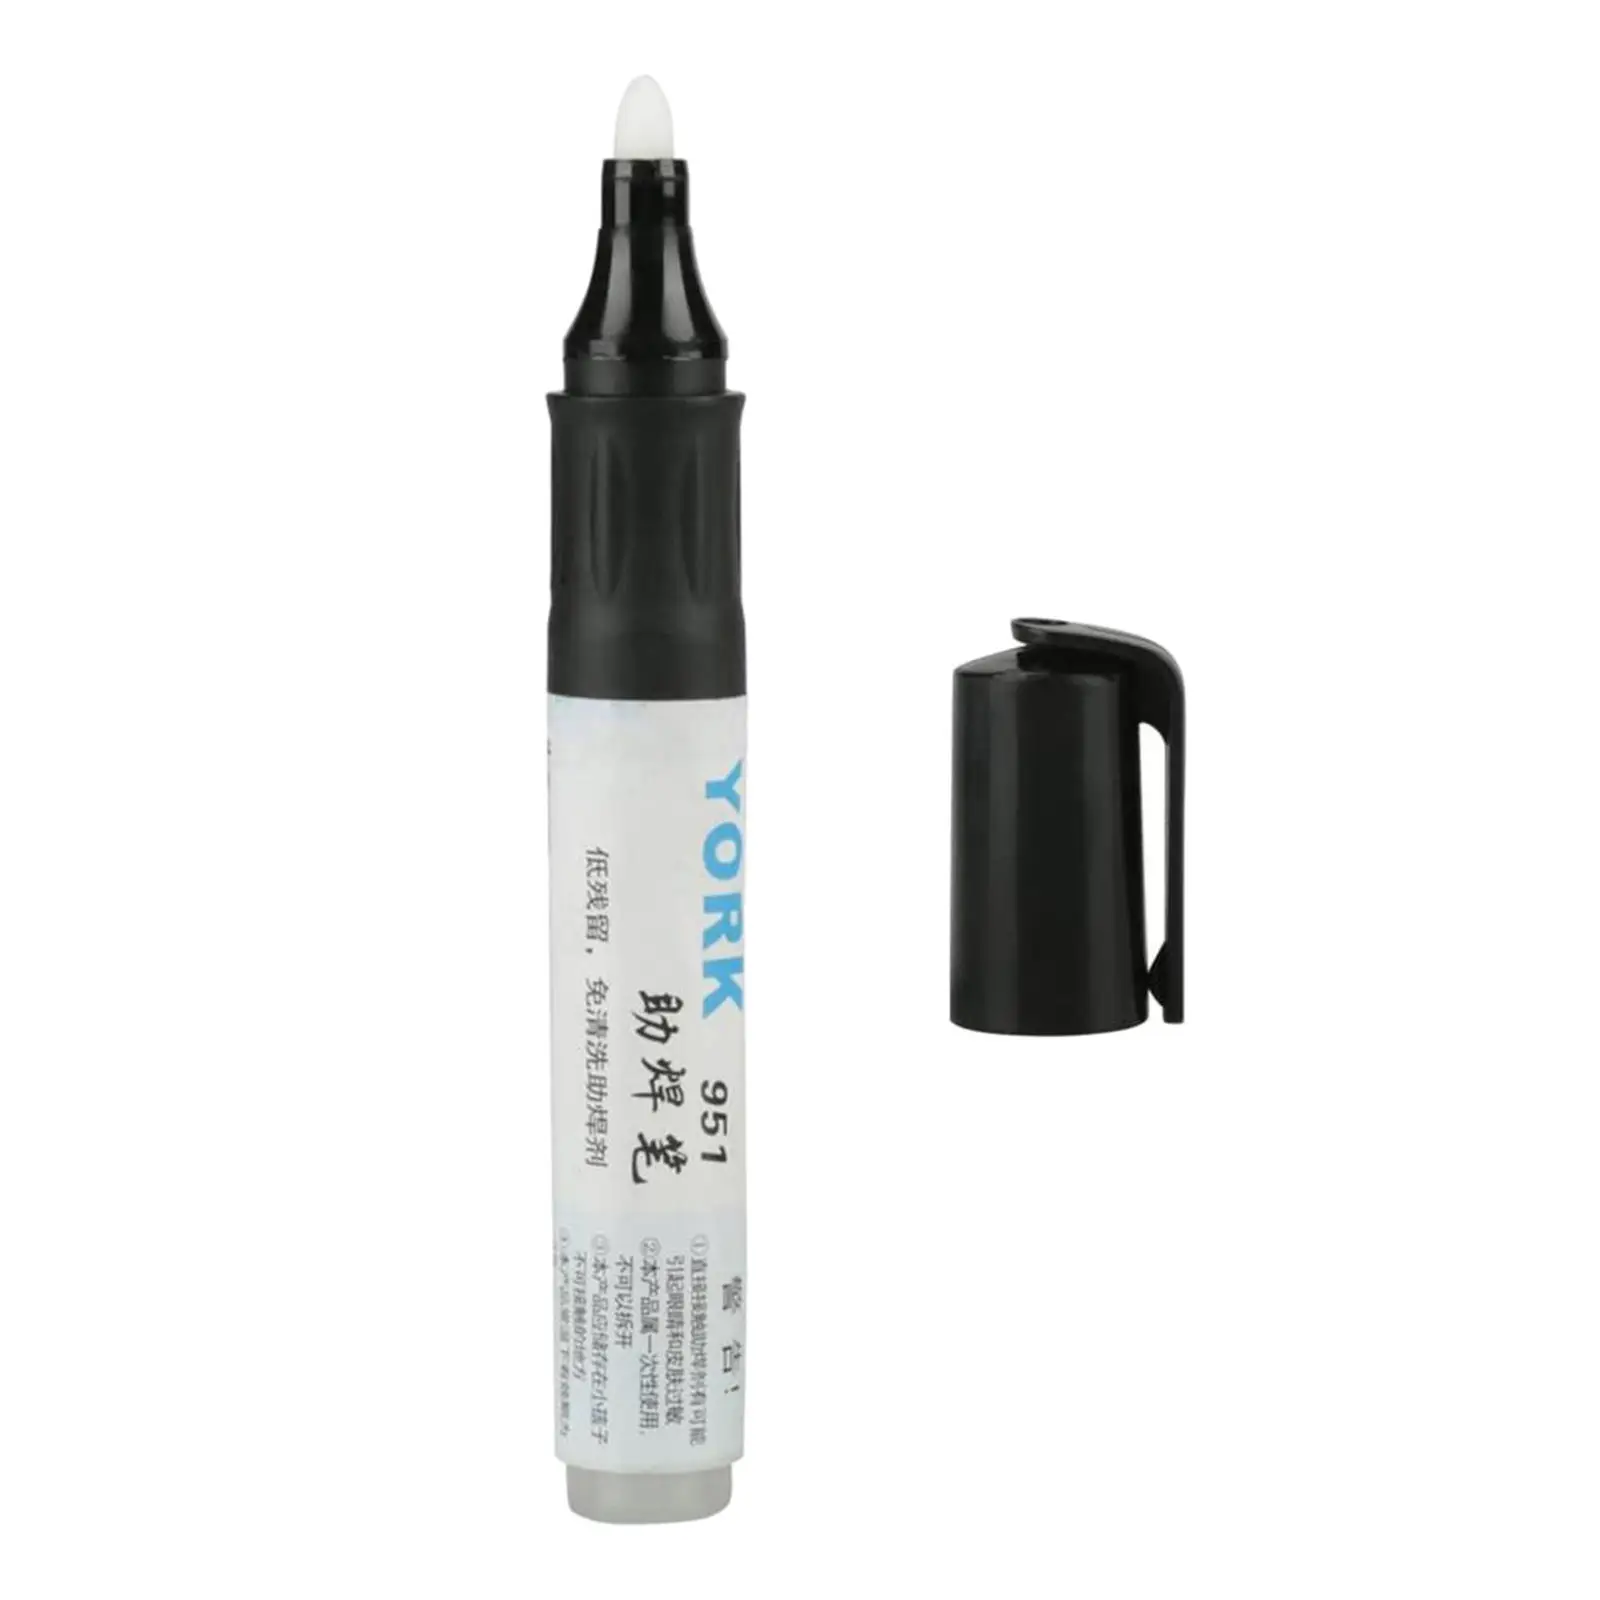 Soldering Flux Pen Environmental Strong Adhesion for Component Rework Reflow Halogen-Free Flux Paste Pen Welding Flux Pen Rosin